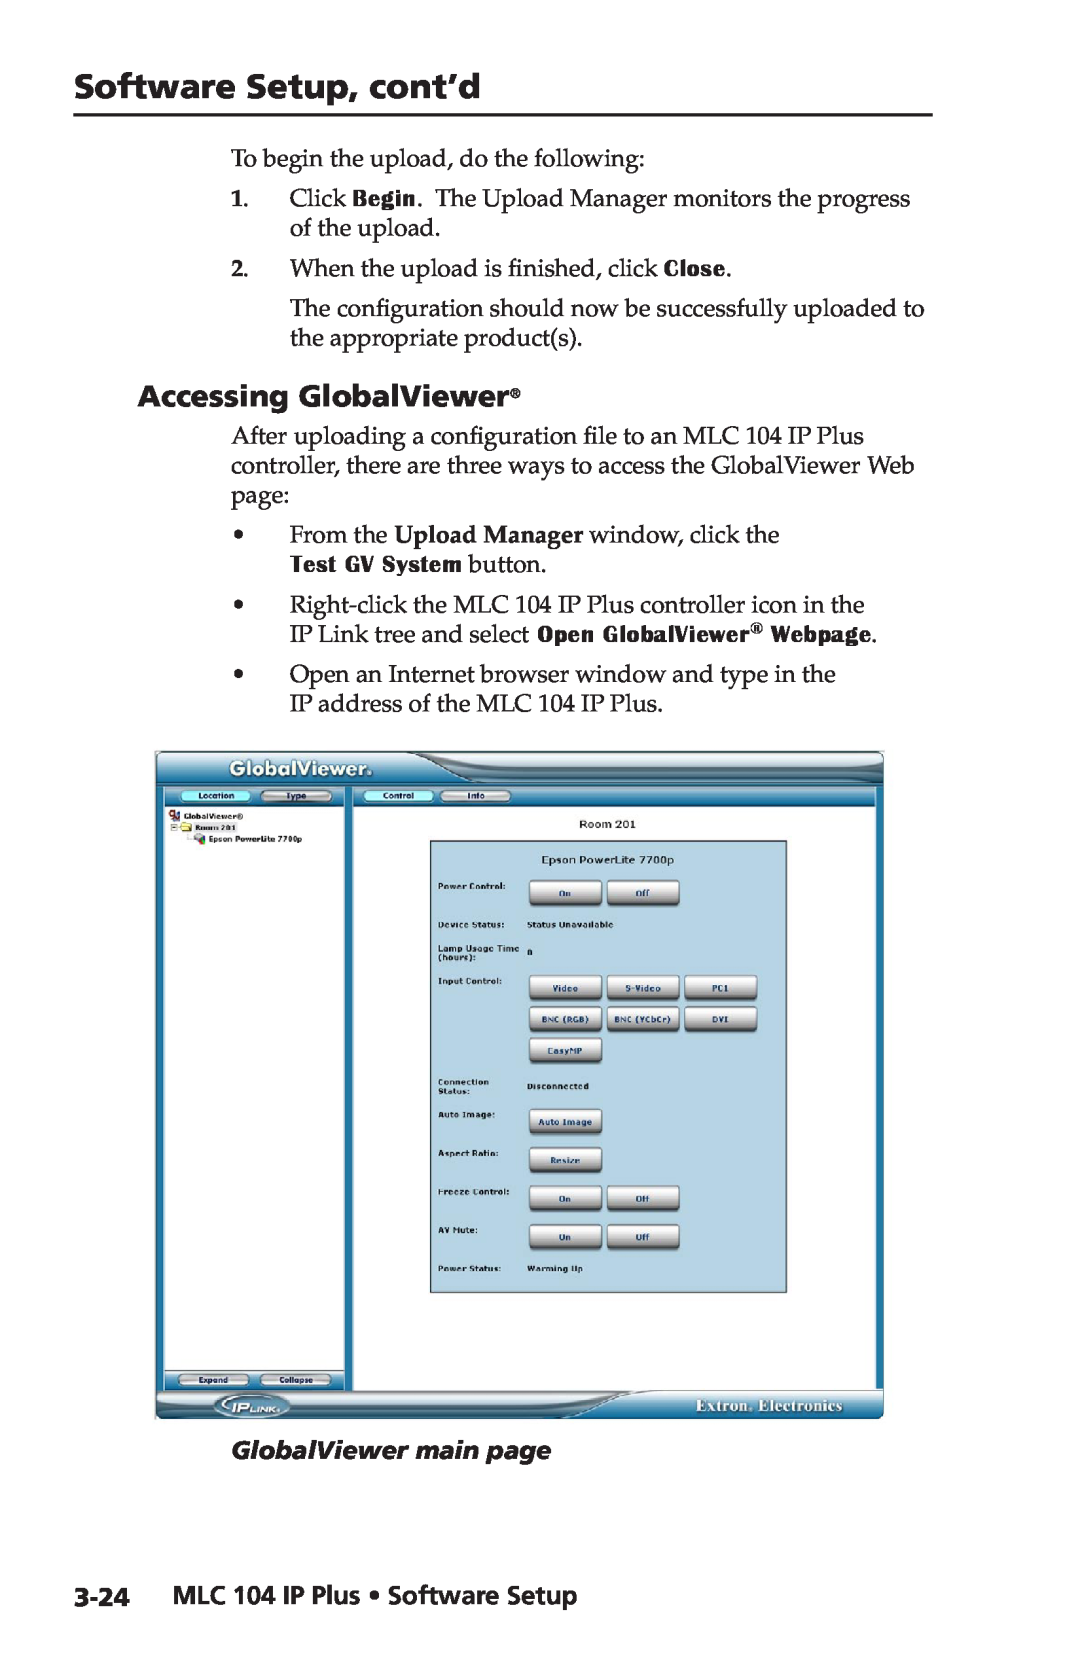 Epson setup guide Accessing GlobalViewer, Software Setup, cont’d, MLC 104 IP Plus Software Setup, Test GV System button 